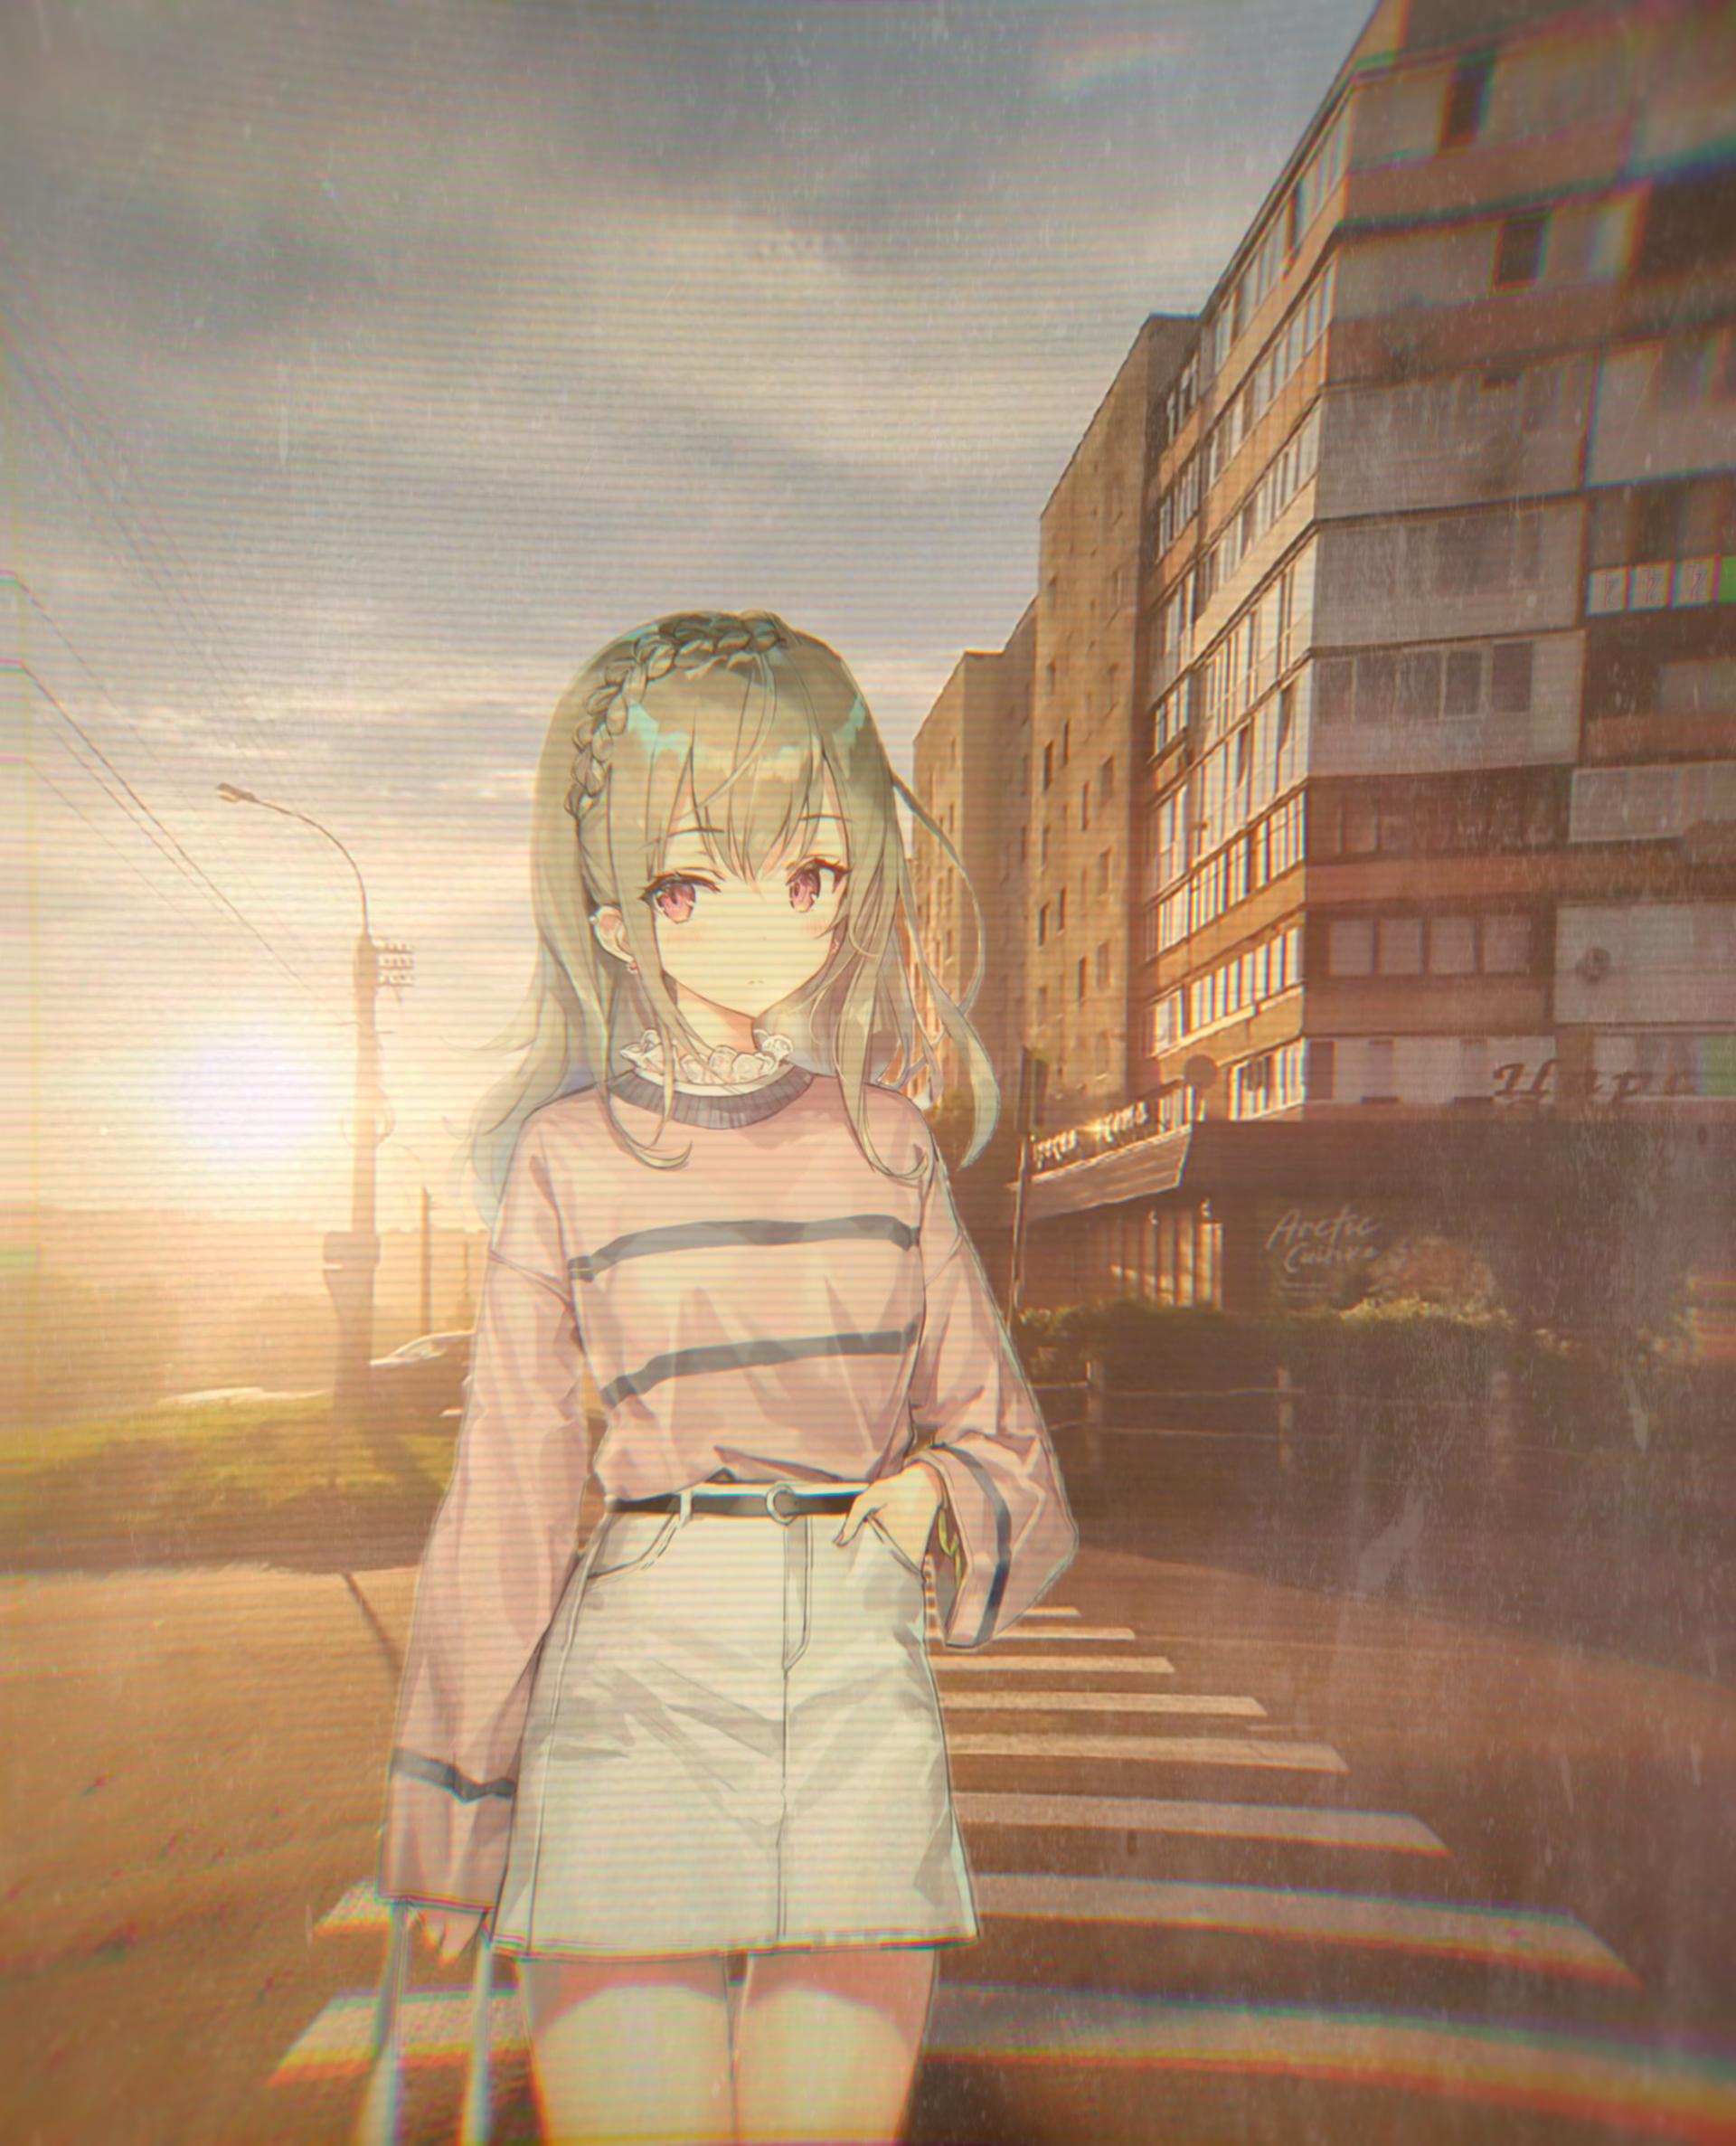 Anime 1920x2373 animeirl crosswalk evening city lens flare anime girls portrait display braids